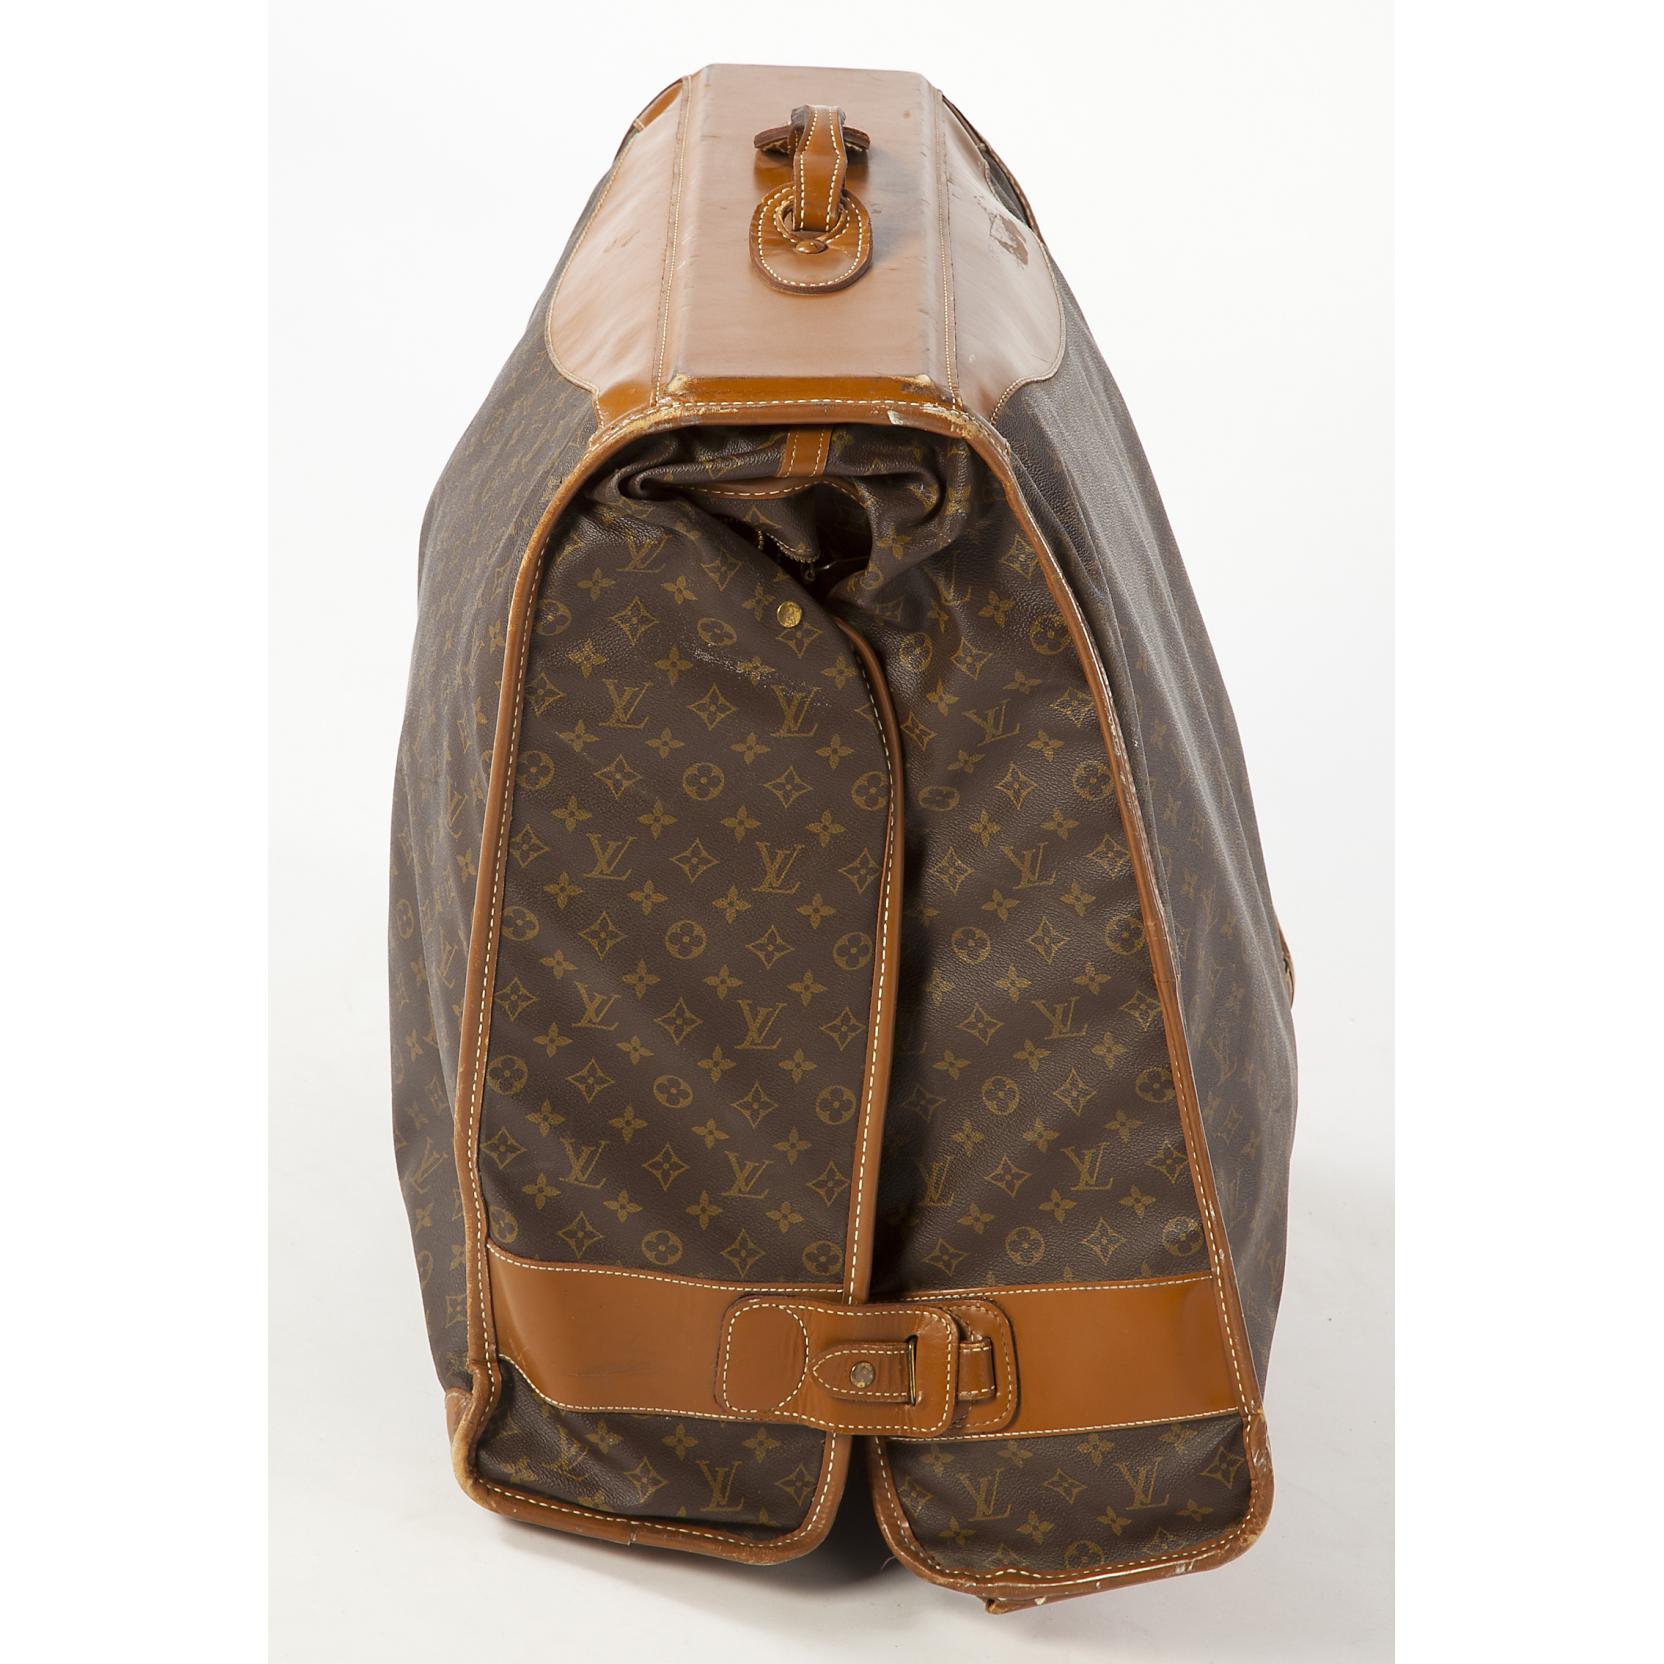 Sold at Auction: Louis Vuitton, Vintage Louis Vuitton Travel Garment  Folding Clothing Bag Luggage